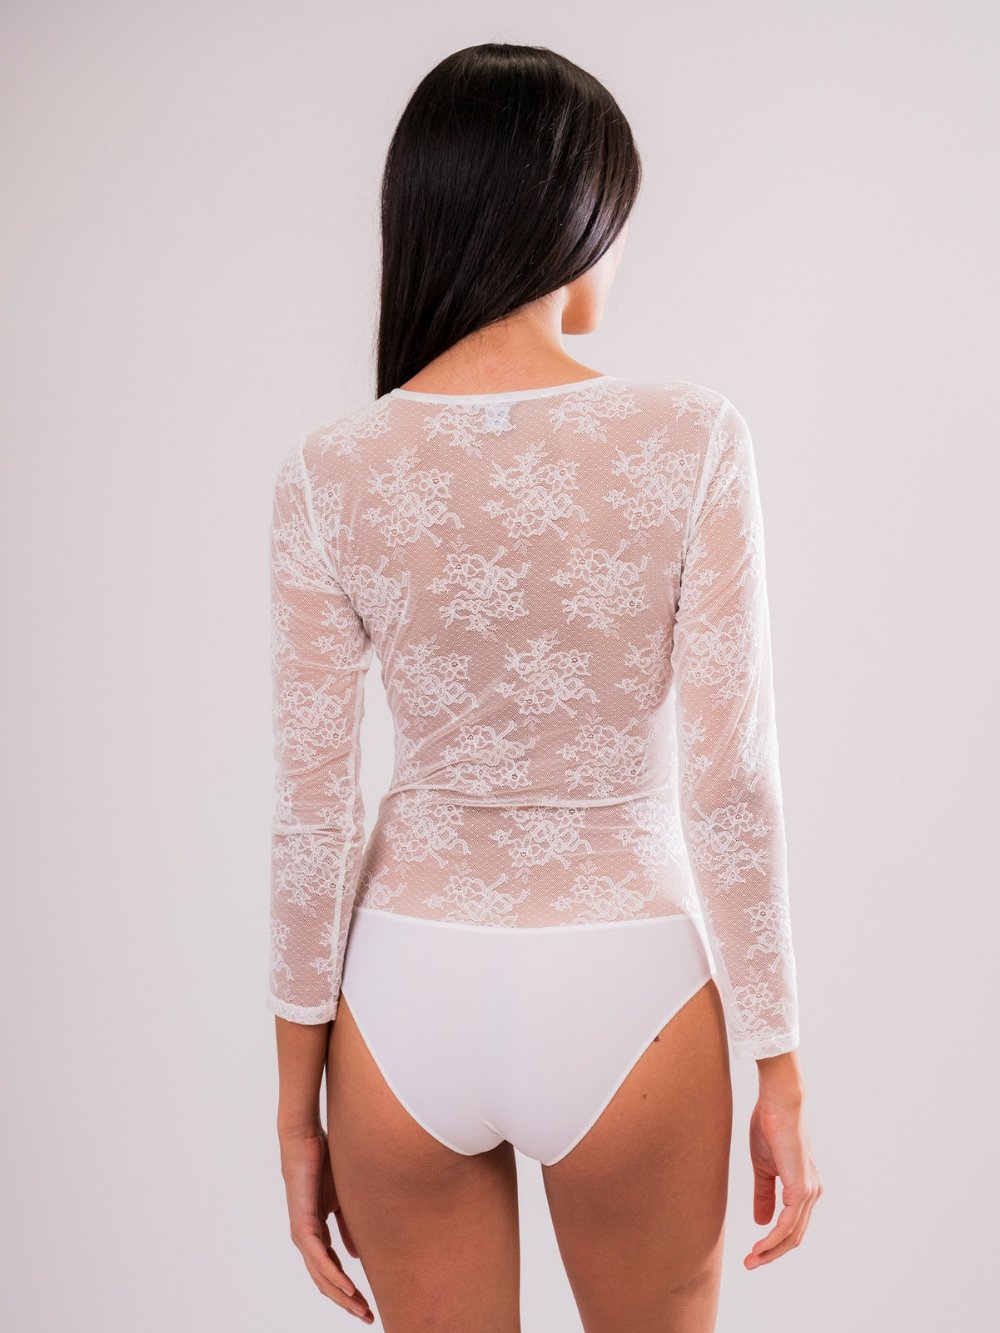 Luxury Lace Bodysuit in White